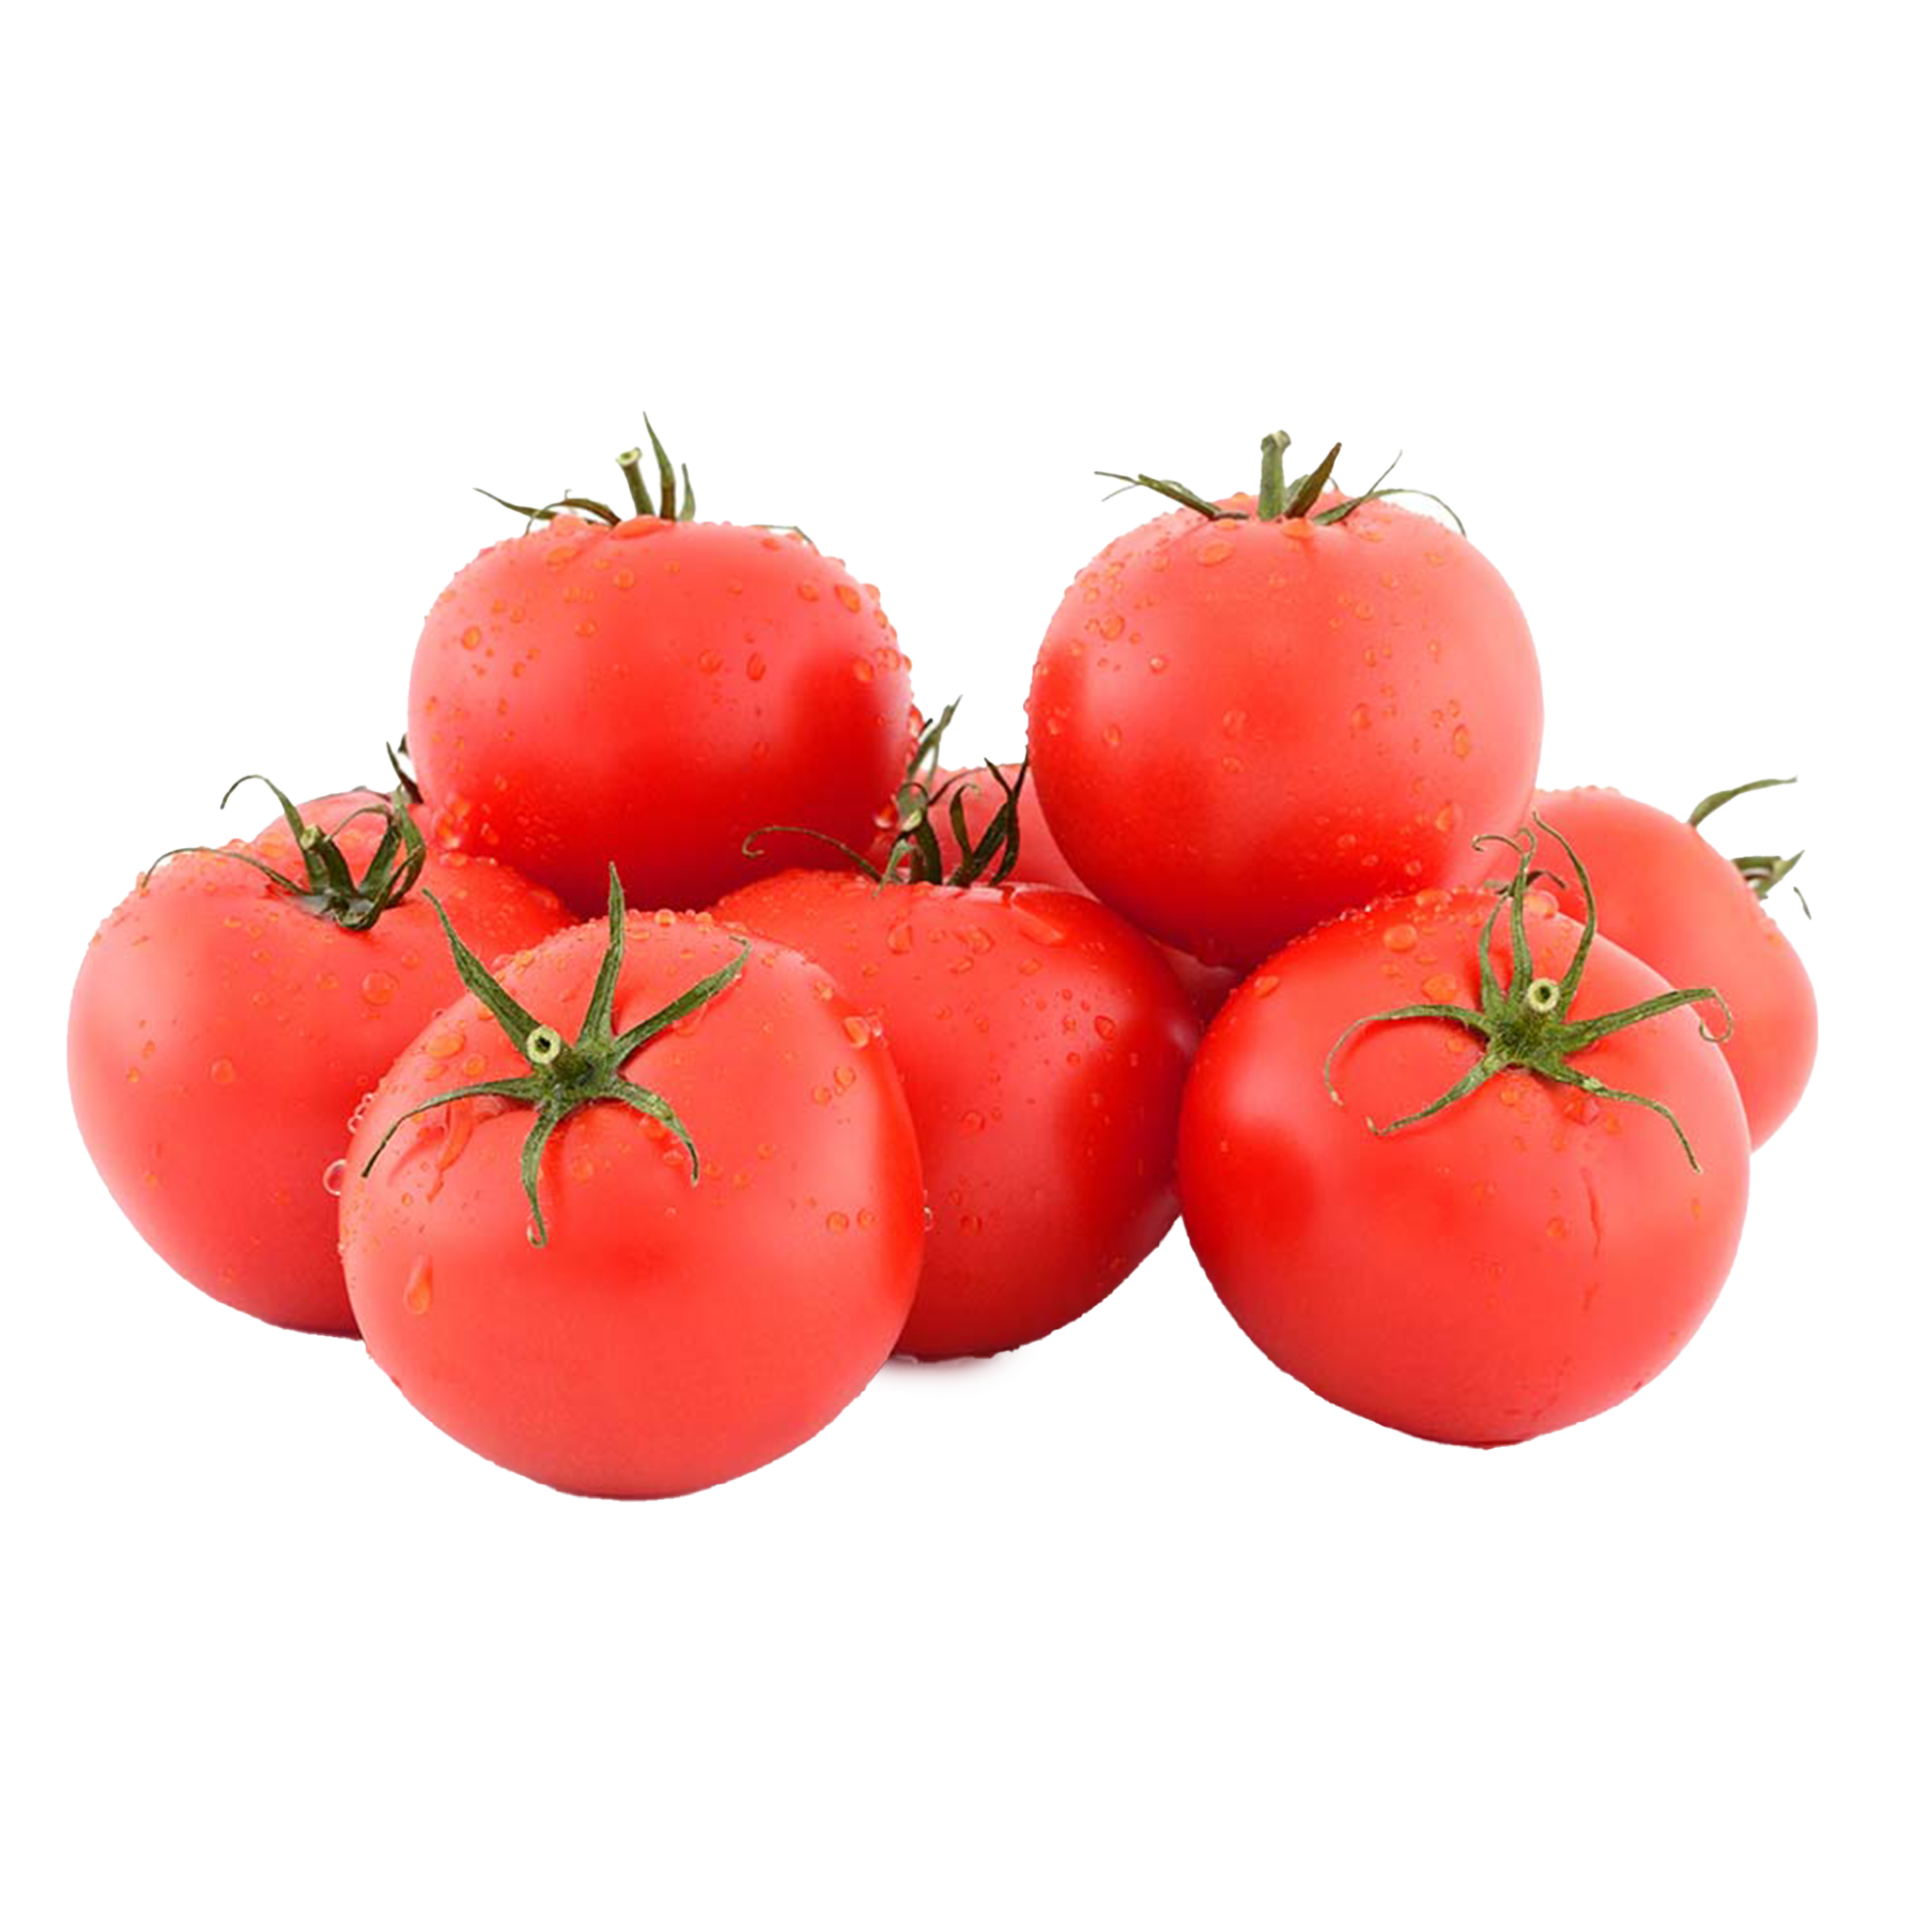 Tomato plants "Light Fruit"